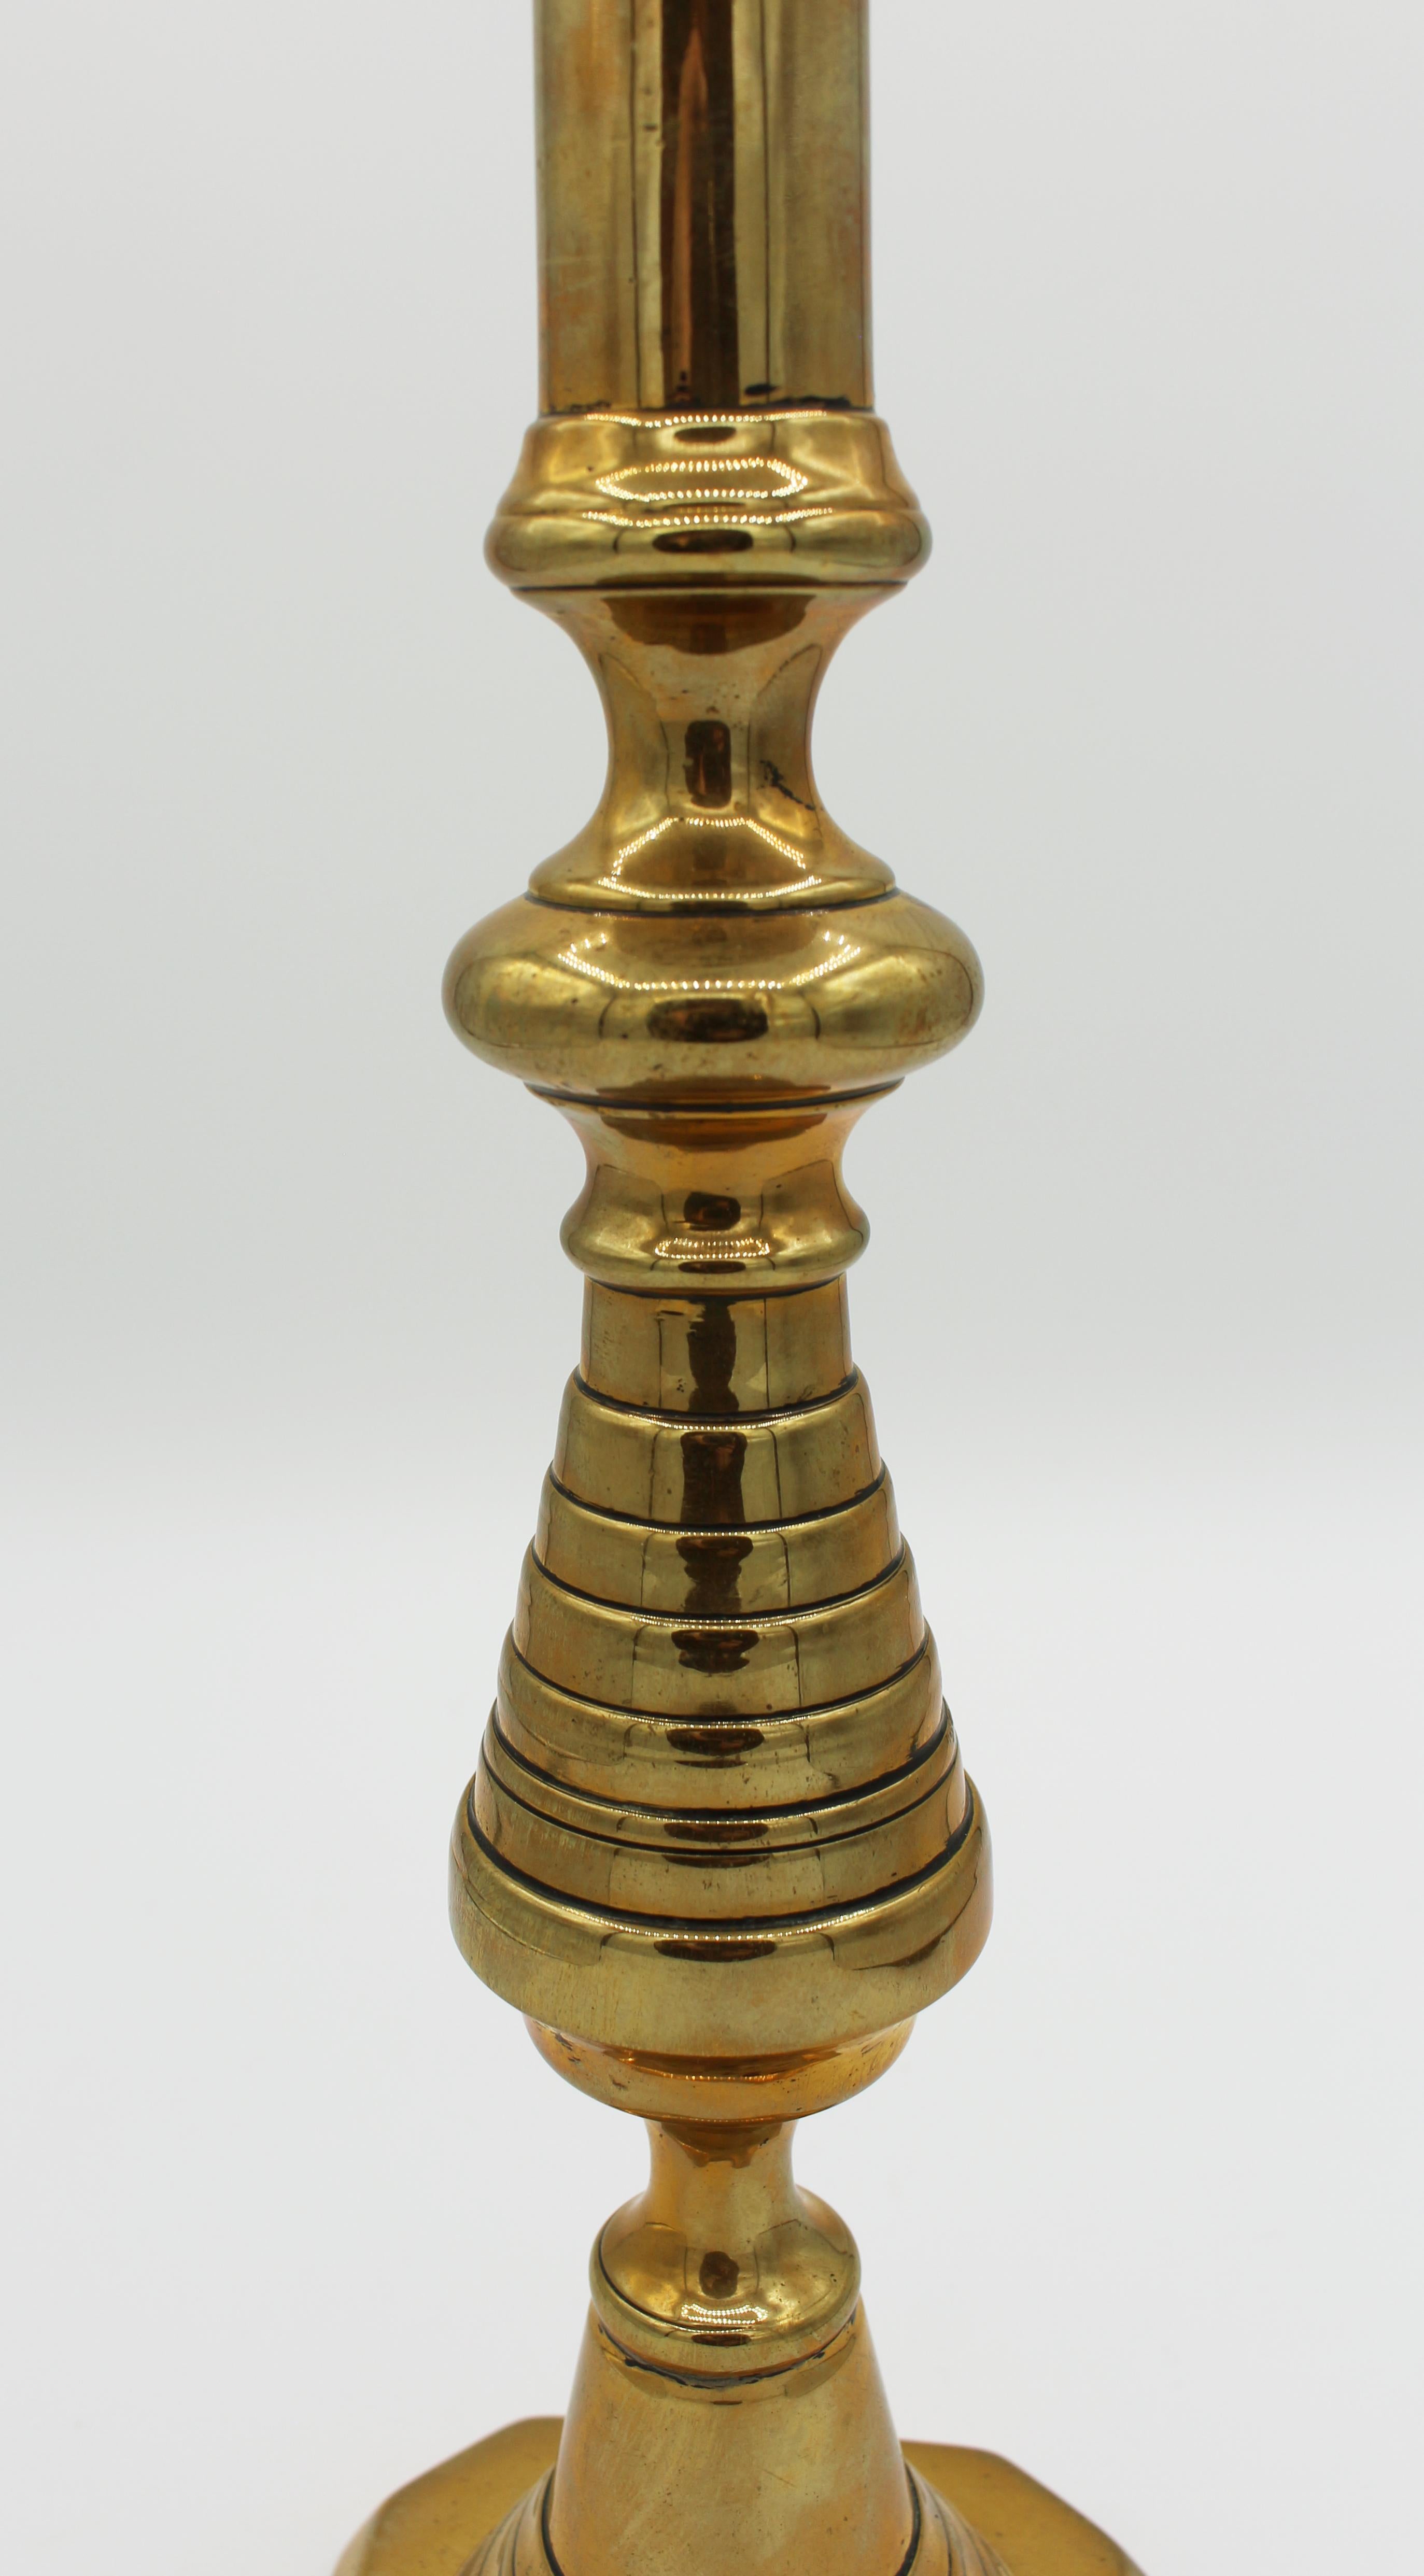 Circa 1860 English Brass Candlesticks, a Pair For Sale 2